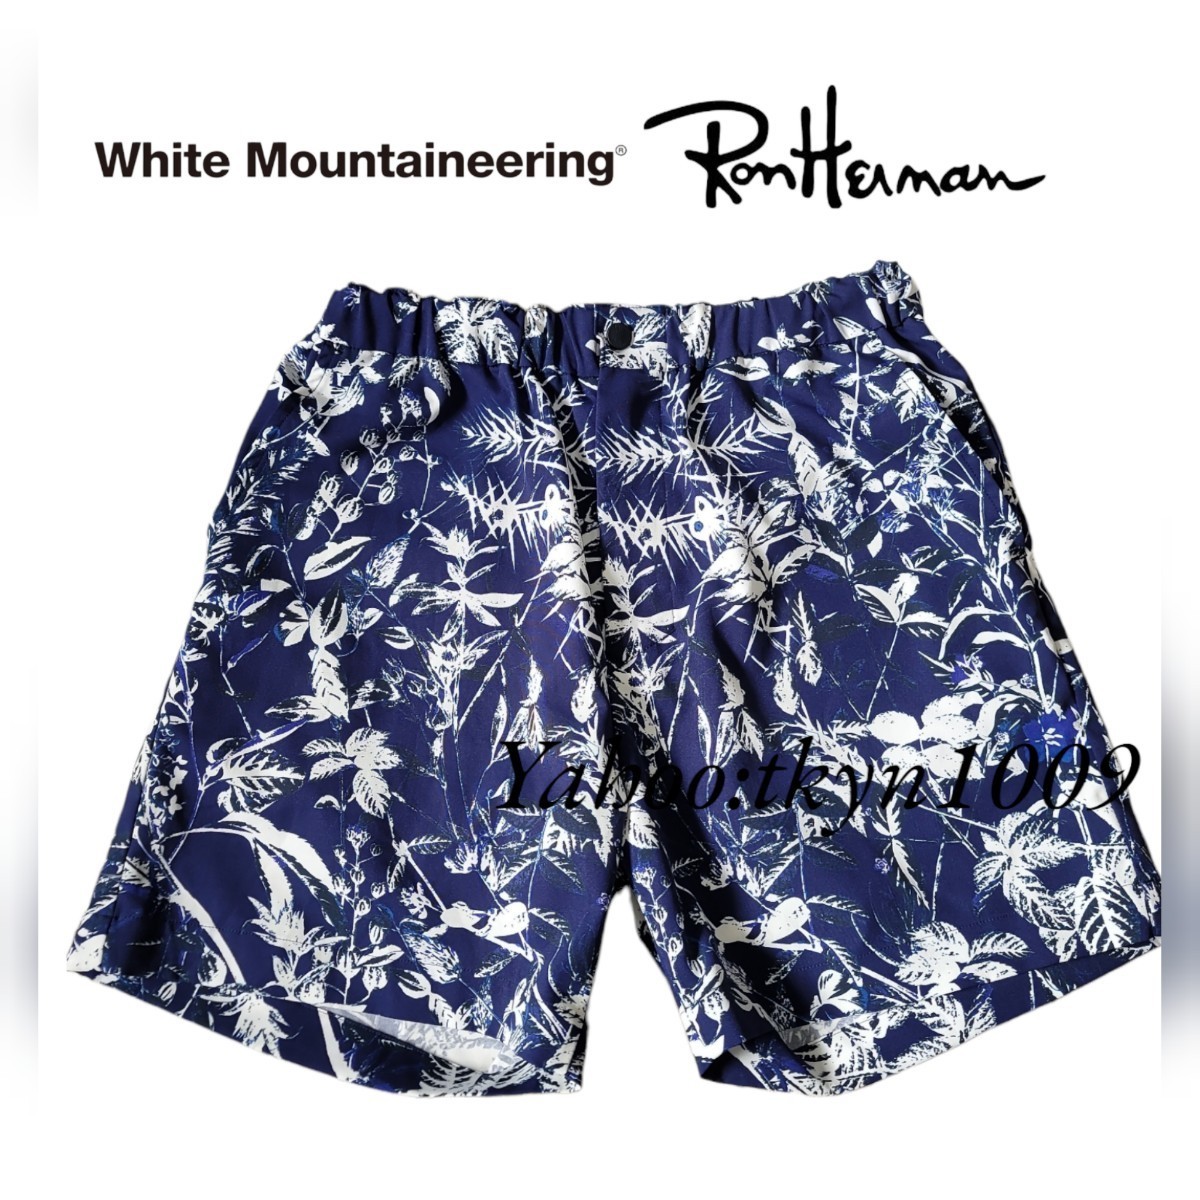 White Mountaineering for Ron Herman ホワイト マウンテニアリング ロンハーマン 別注 コラボ 水陸両用 スイム ショーツ ショートパンツ